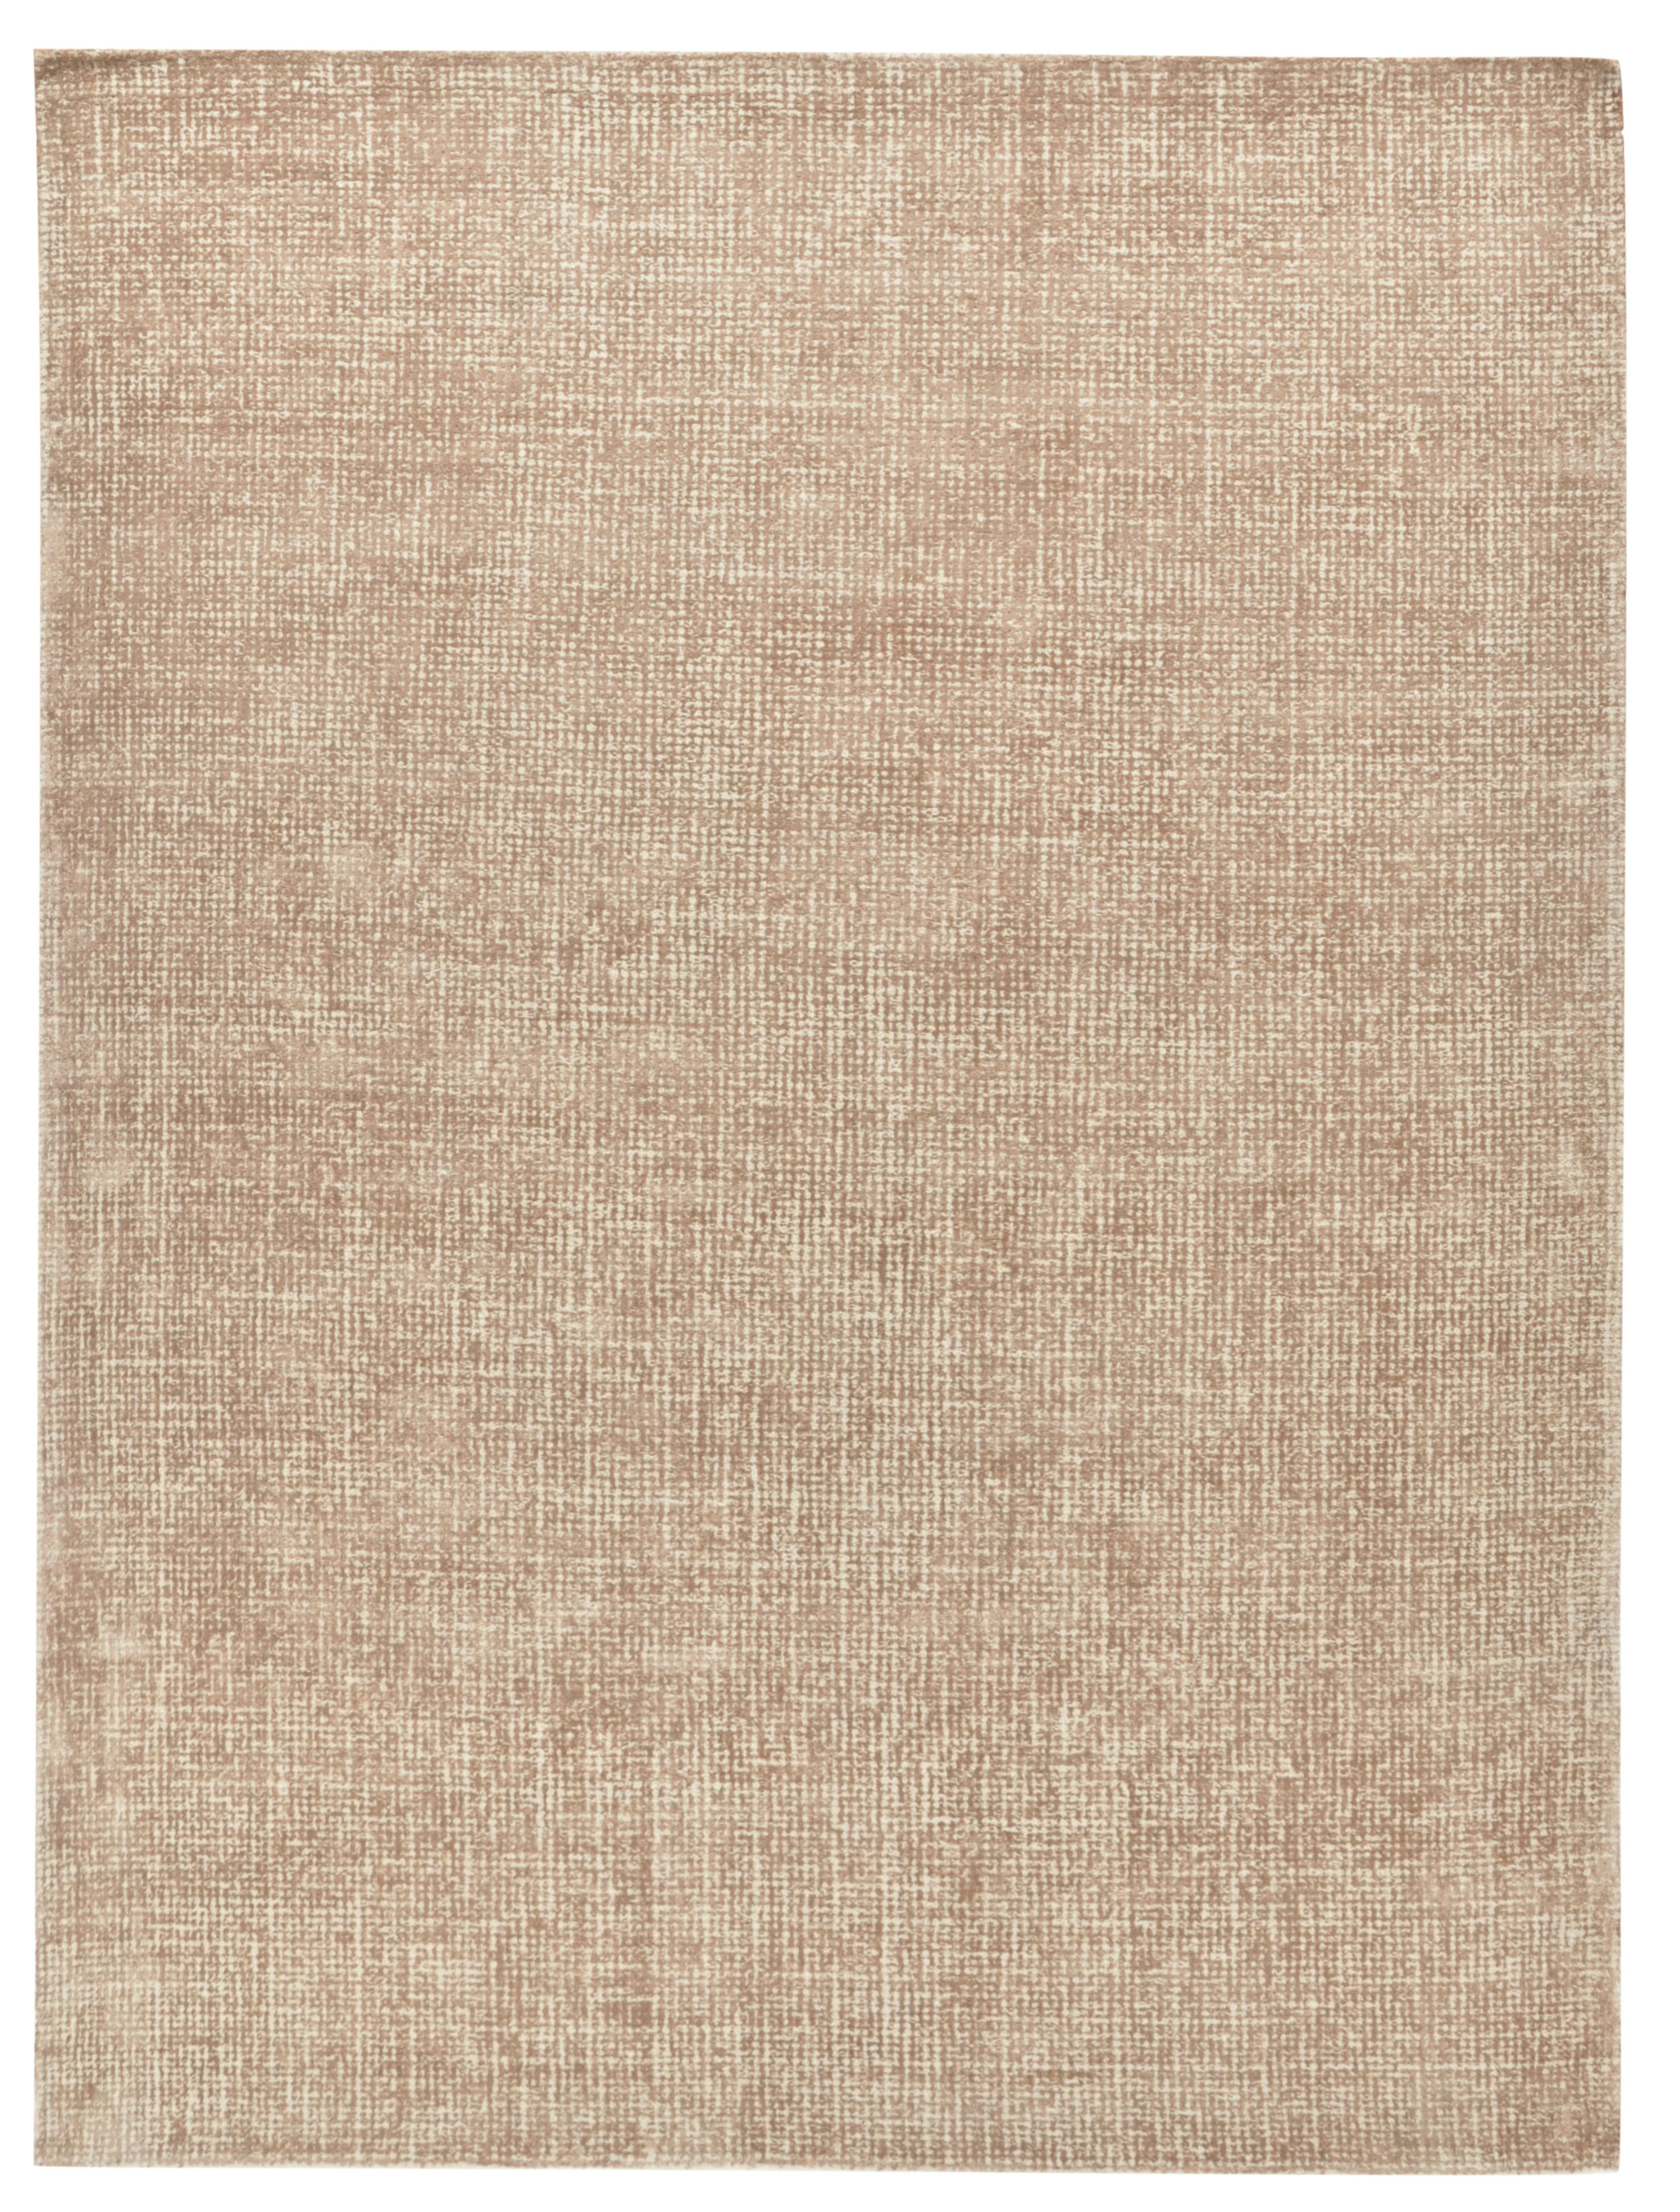 HANDWEBTEPPICH 65/135 cm  - Braun, Basics, Textil (65/135cm) - Tom Tailor